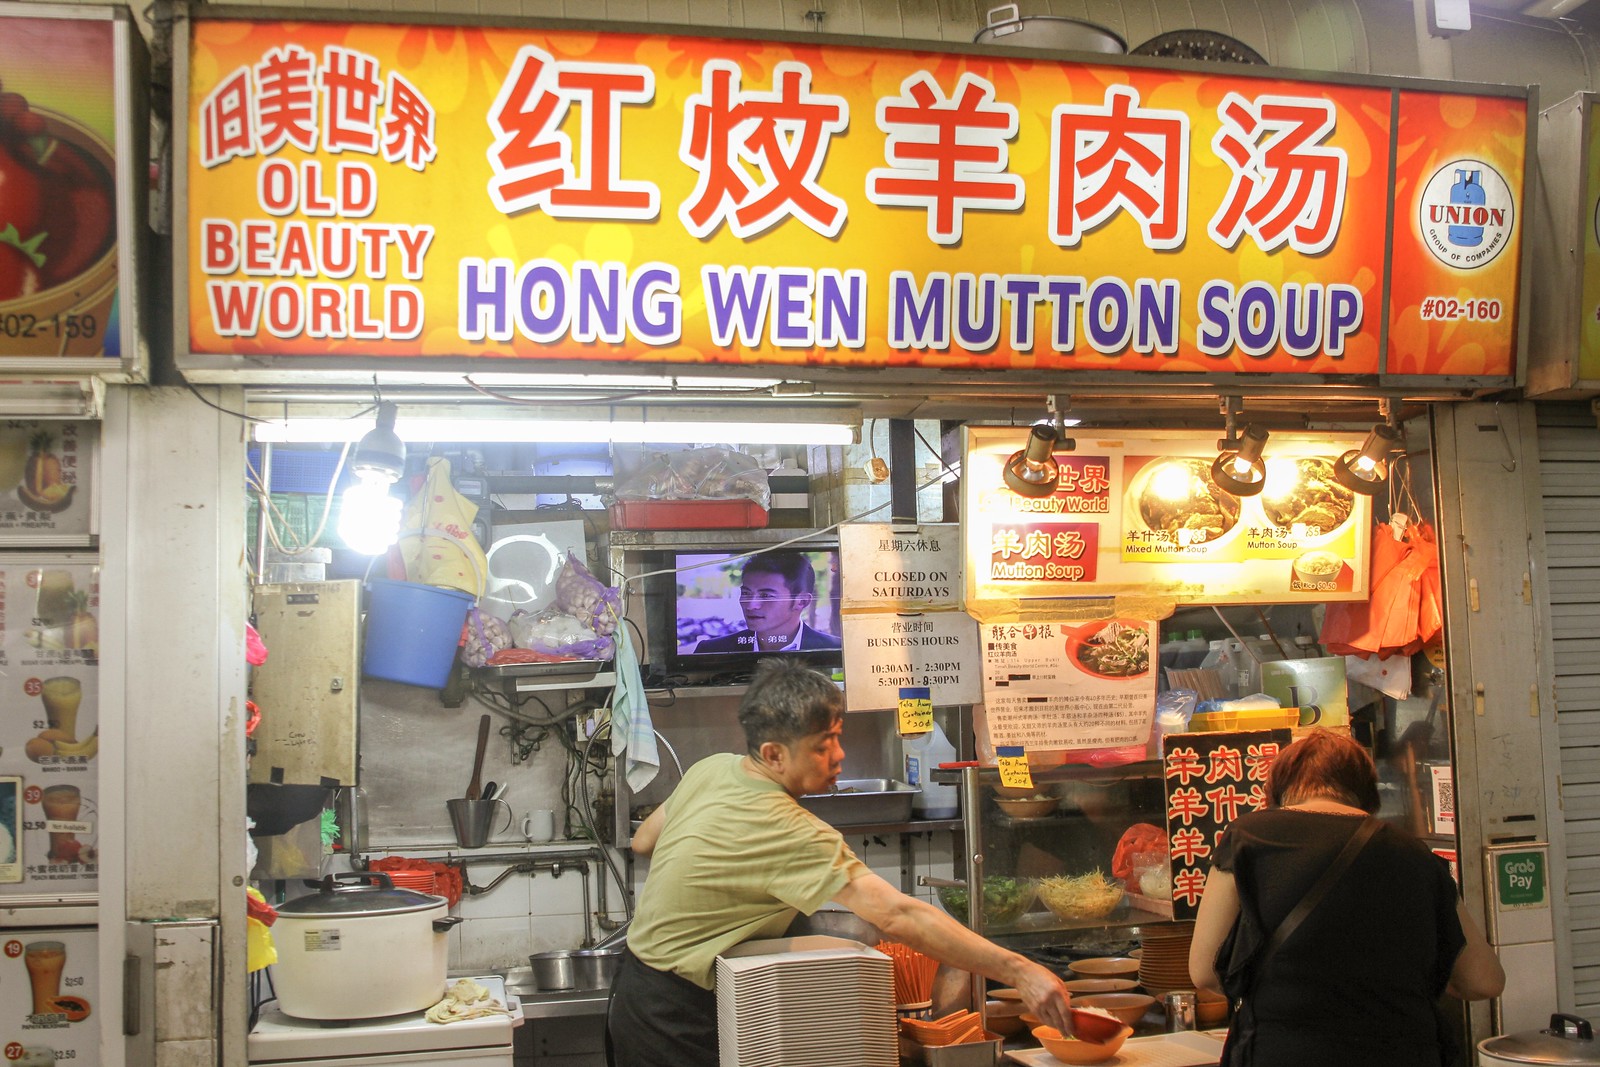 Bukit Timah Food Centre - Hong Wen Mutton Soup Stall Front